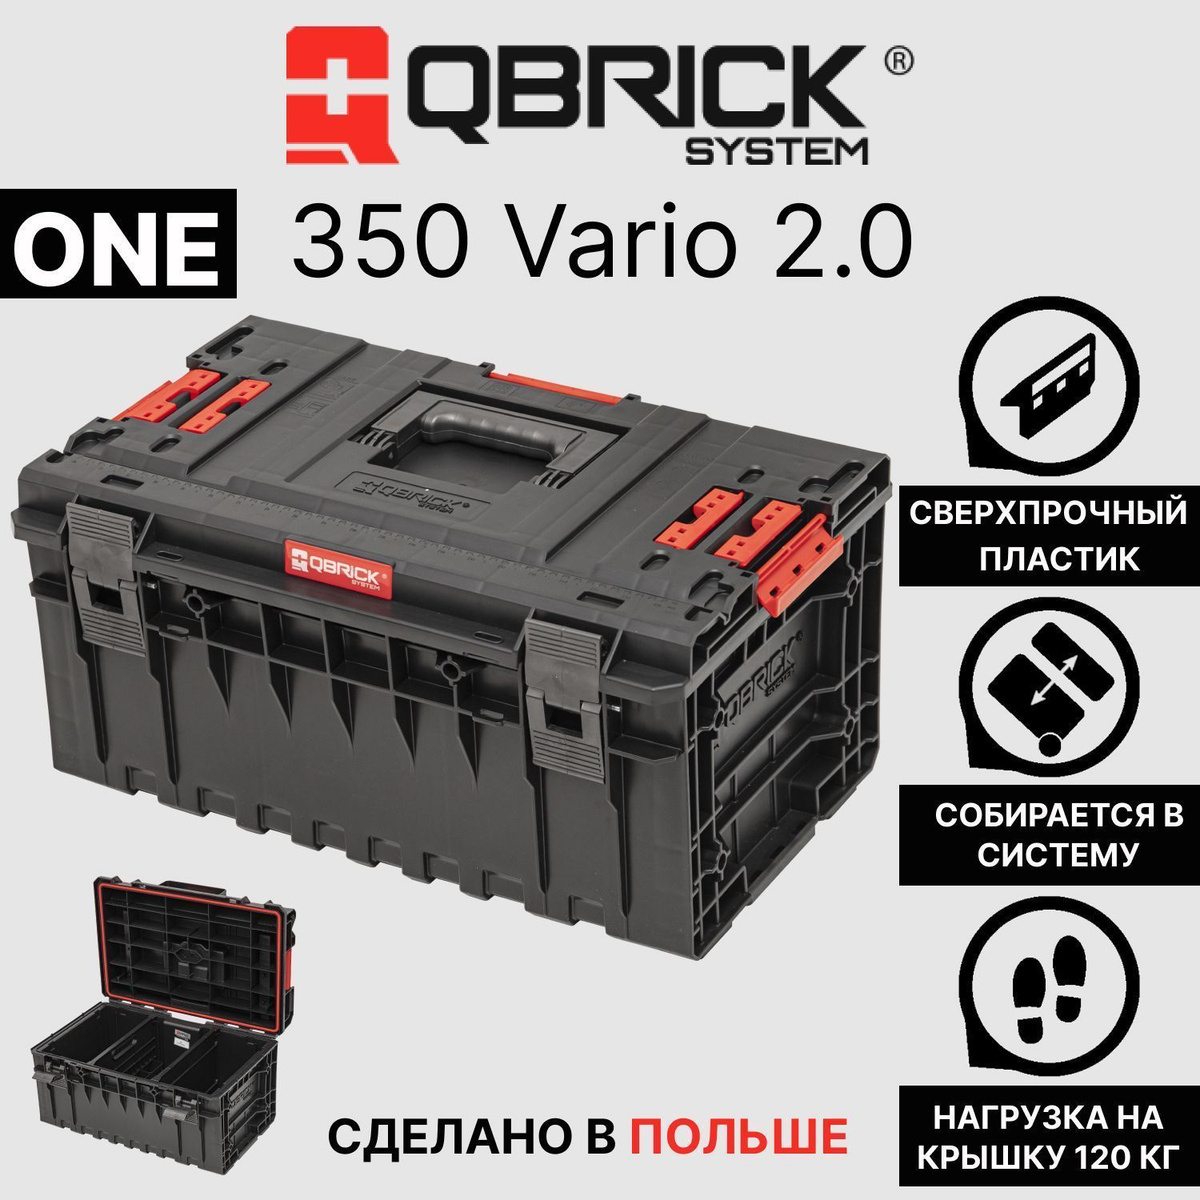 Qbrick System ONE 350 Vario 2.0